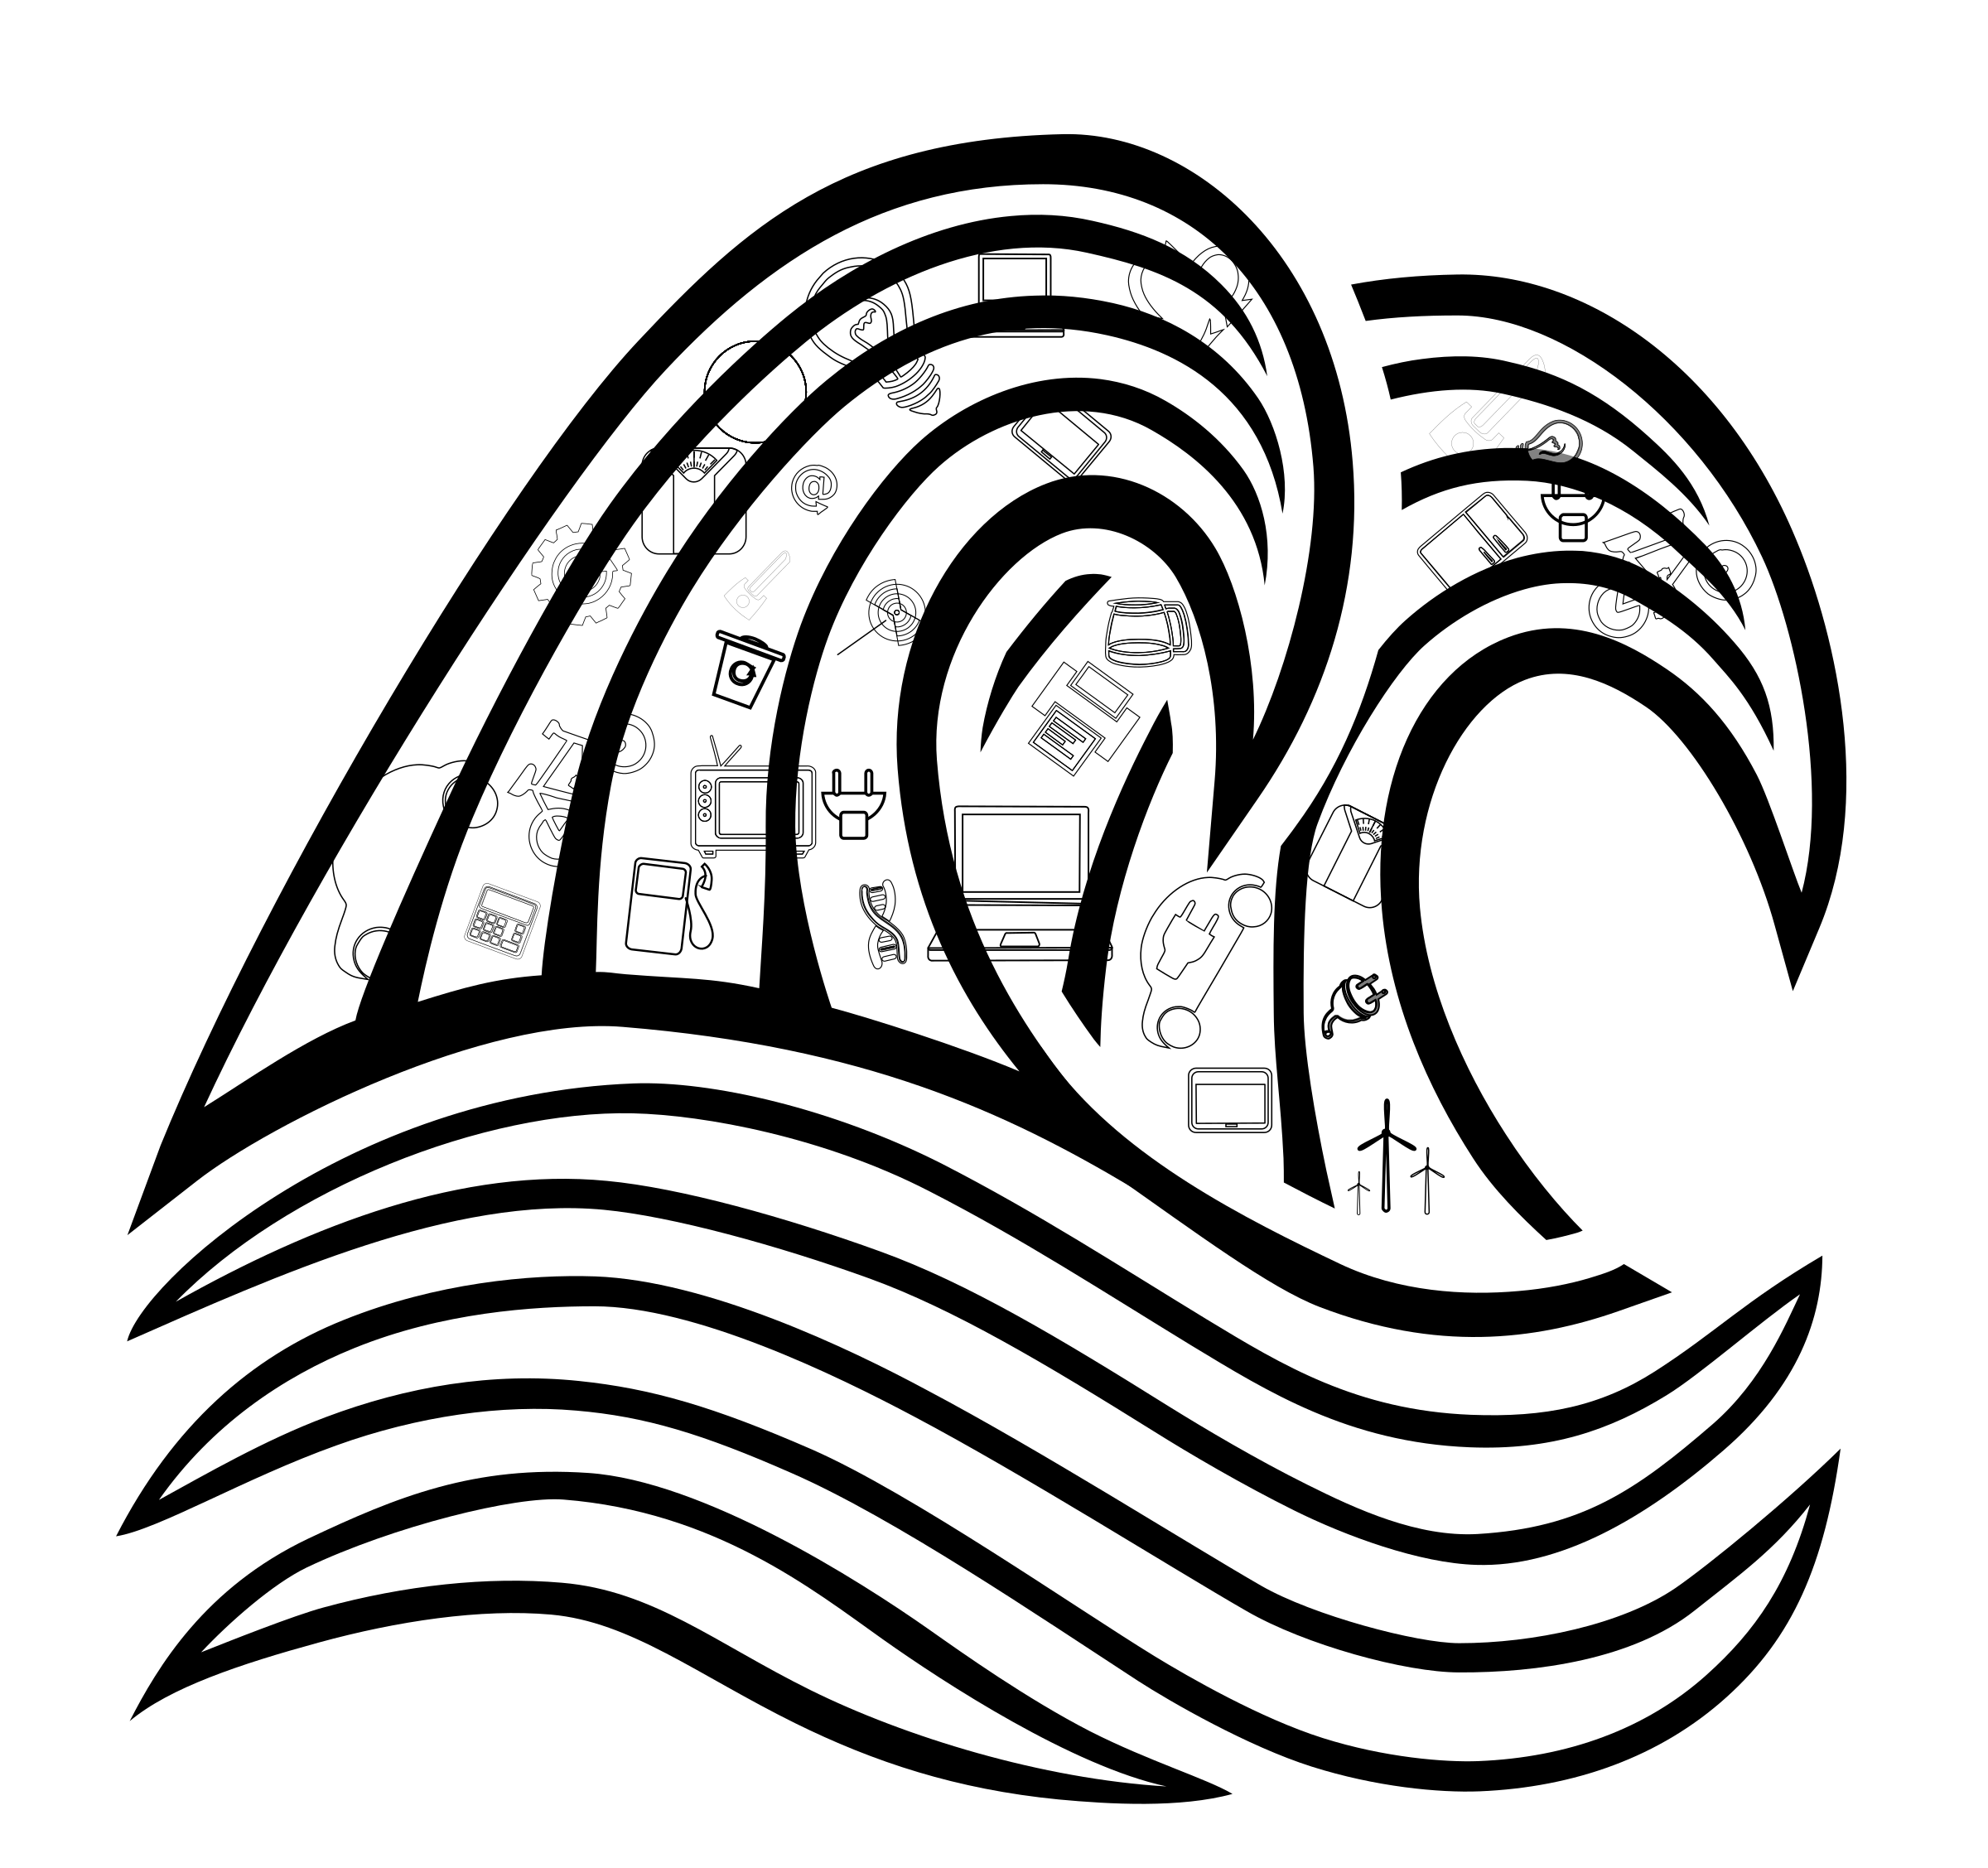 clipart wave symbol